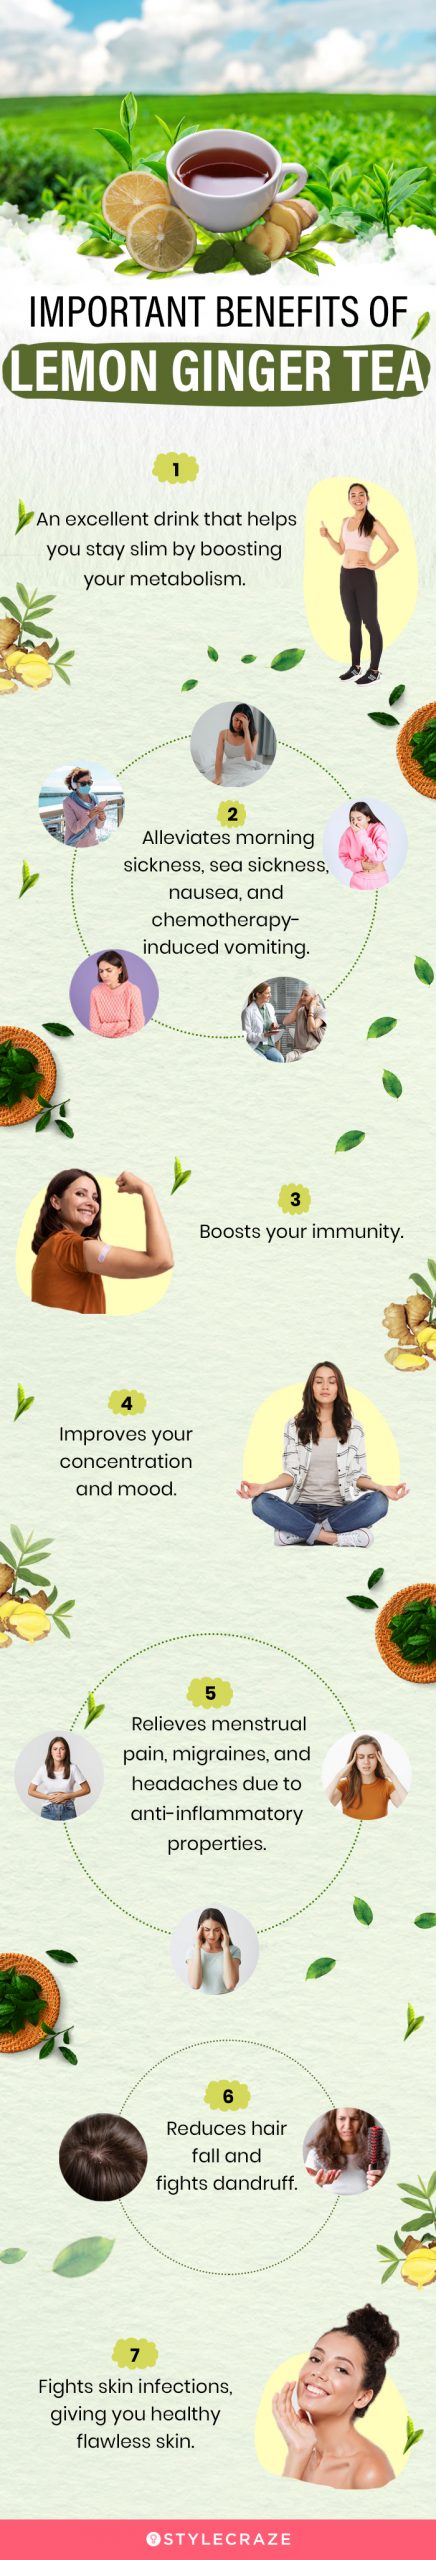 important benefits of lemon ginger tea [infographic]